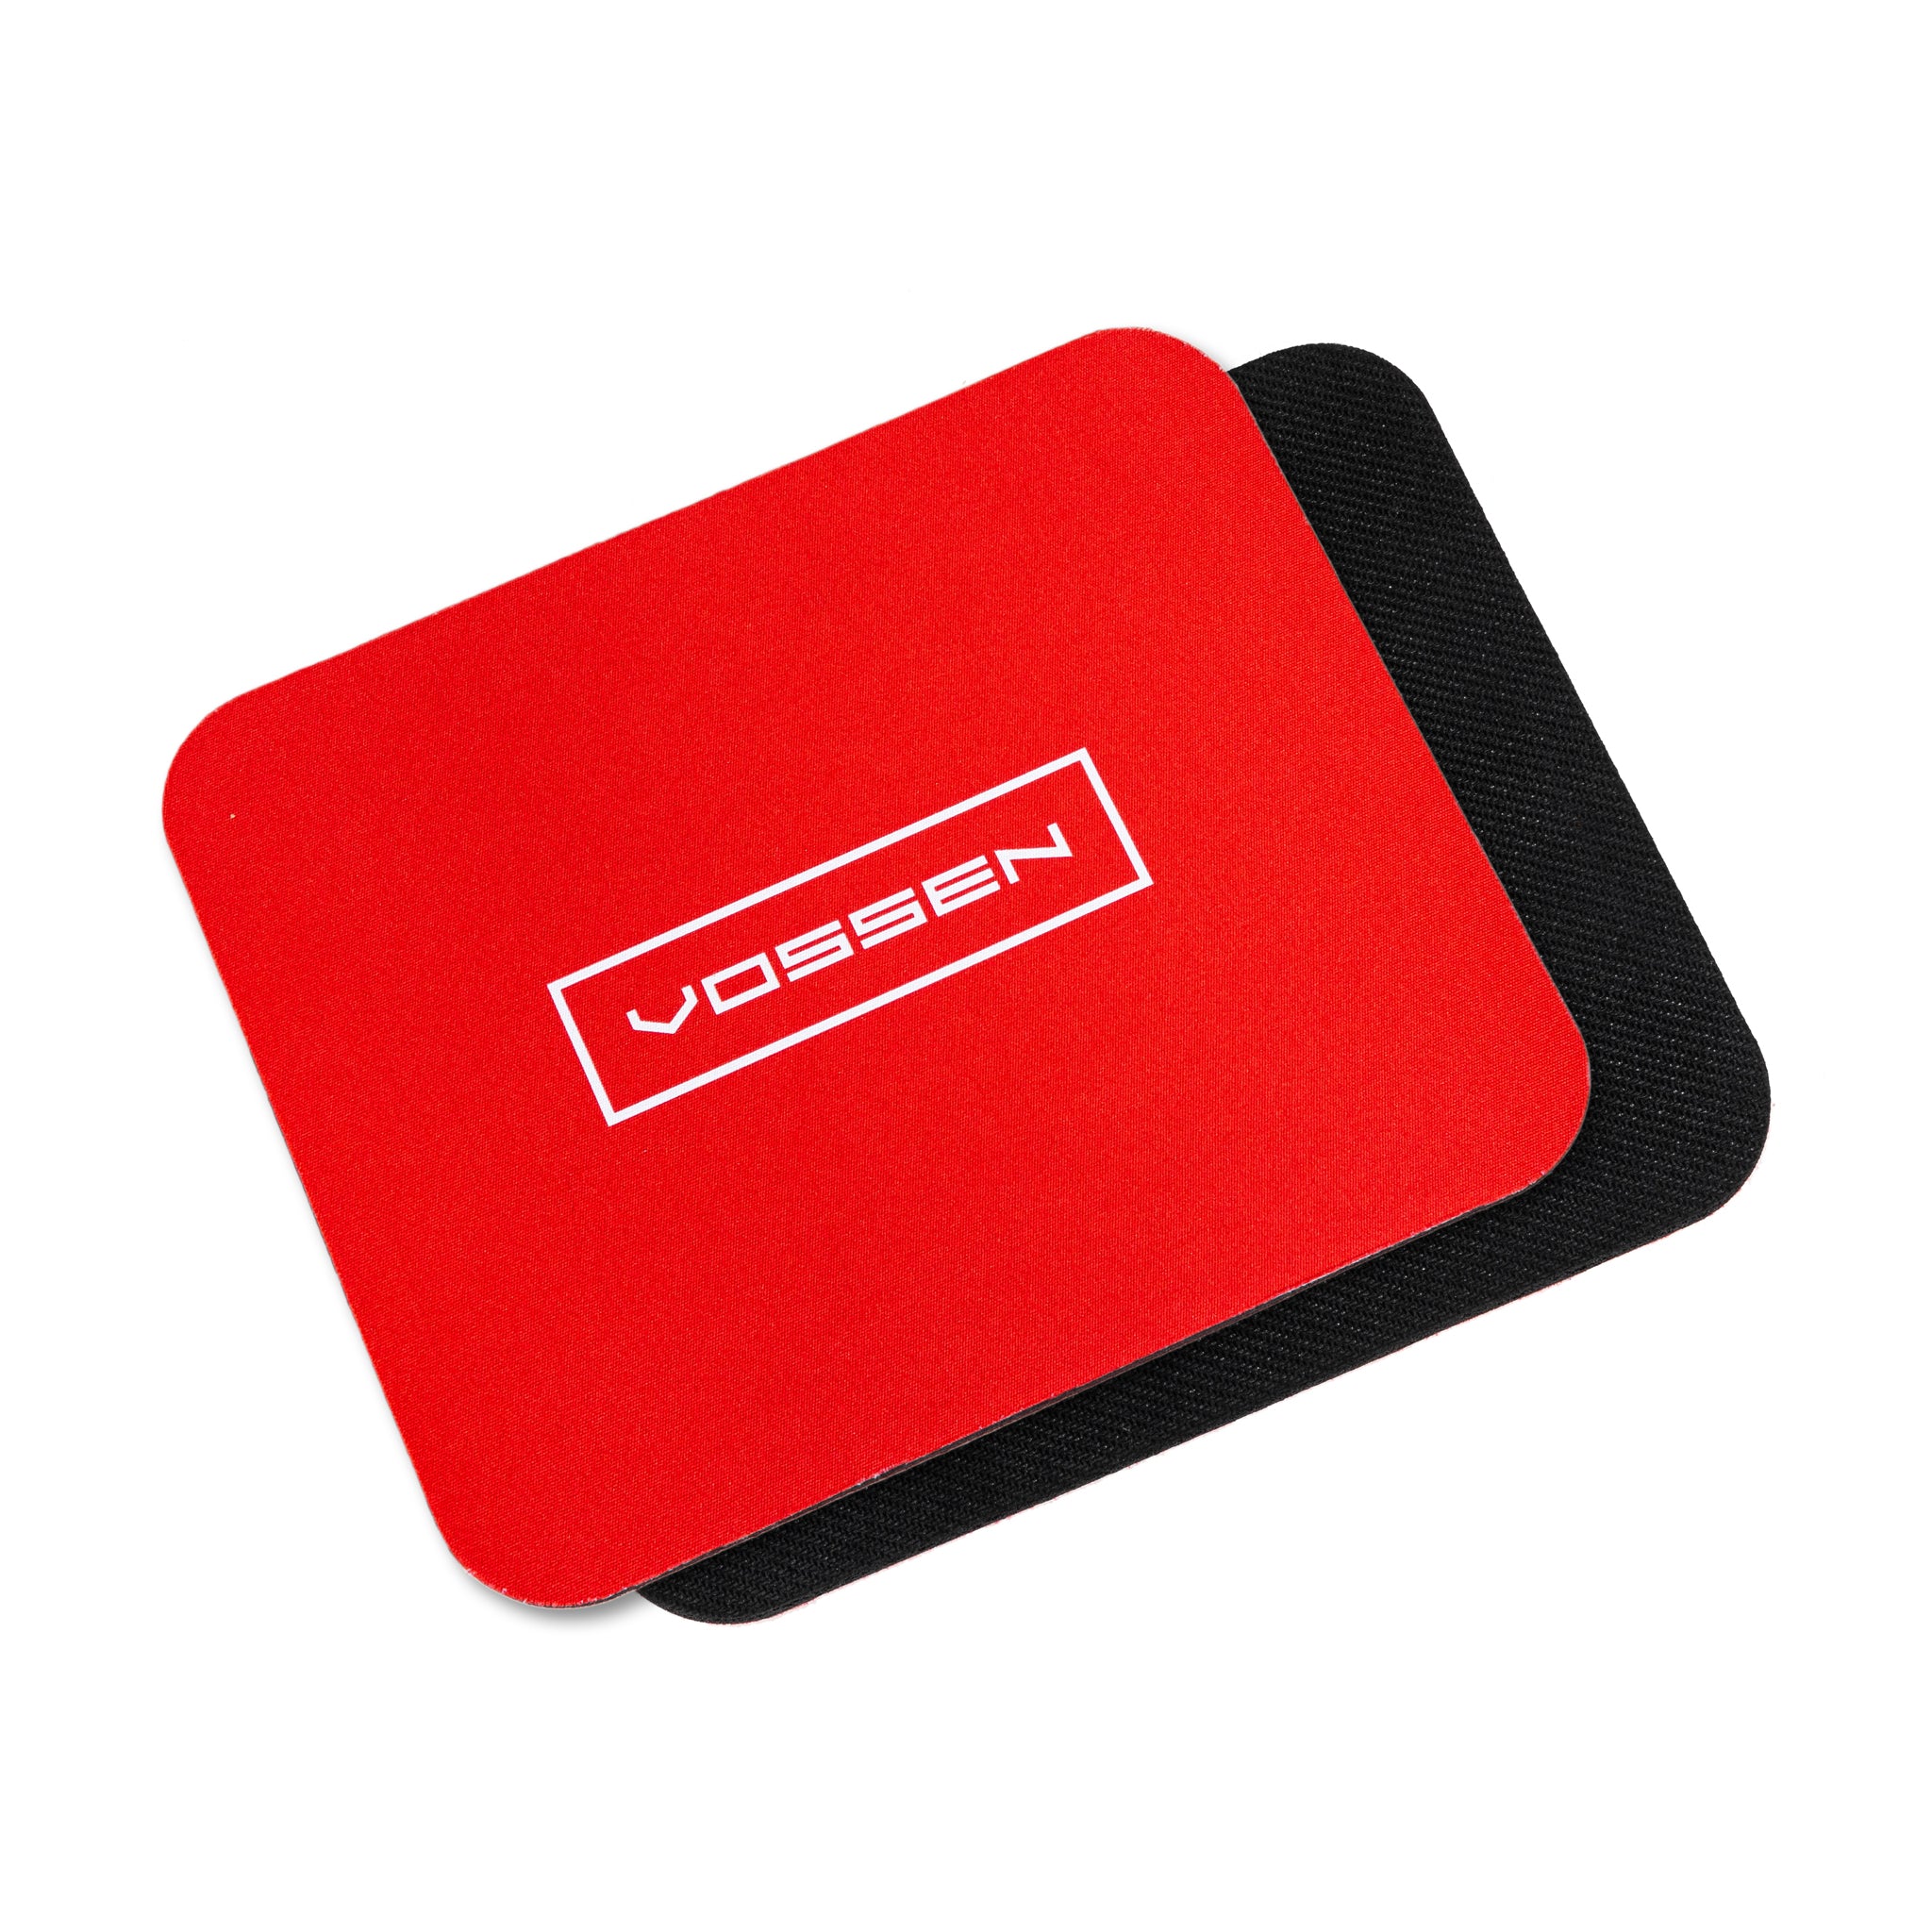 Vossen Slab Outline Mousepad (Red) - Vossen